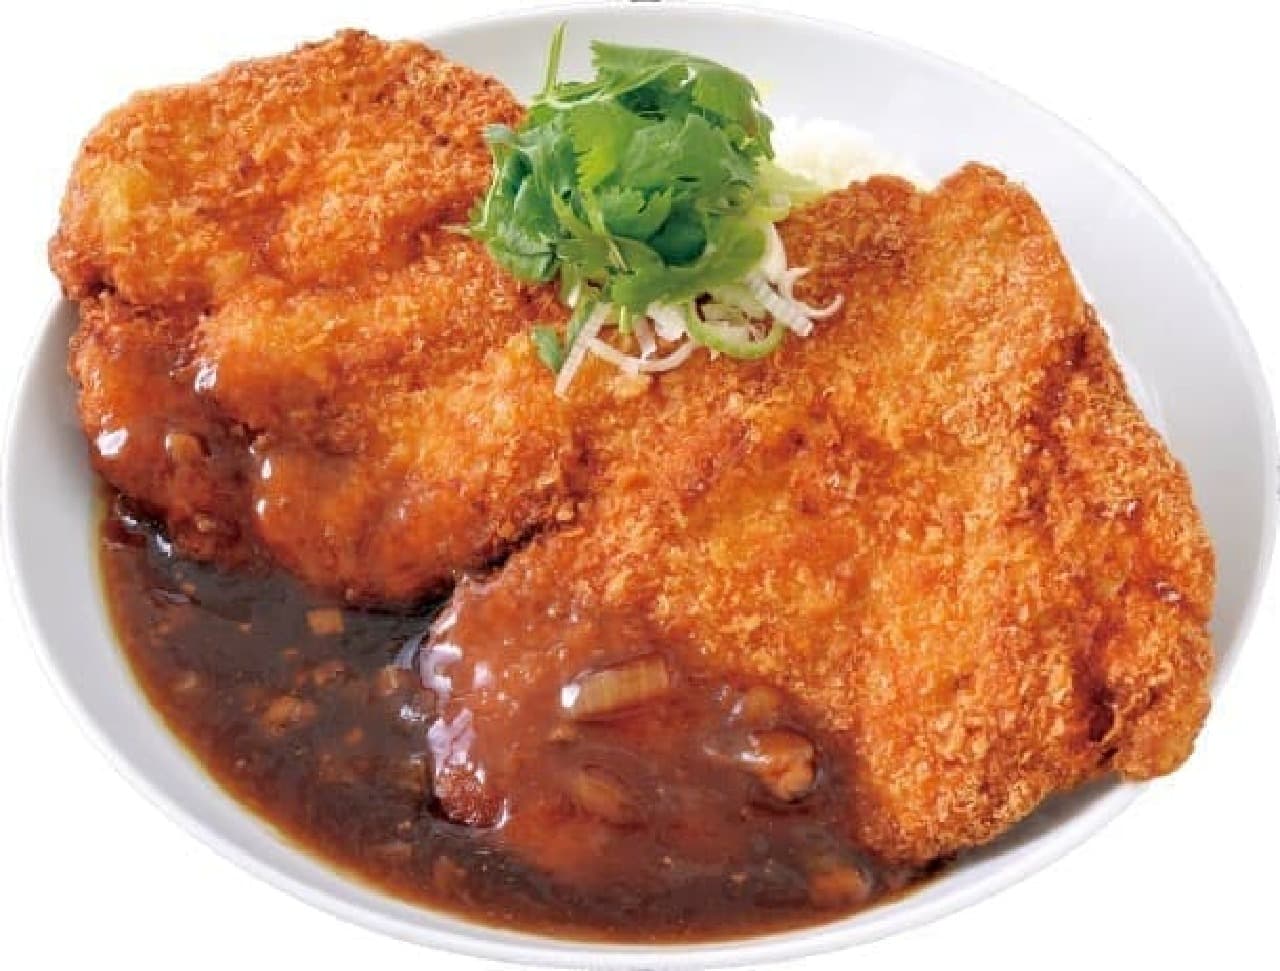 DRAGON DELI "Shanghai Chicken Katsu Rice"